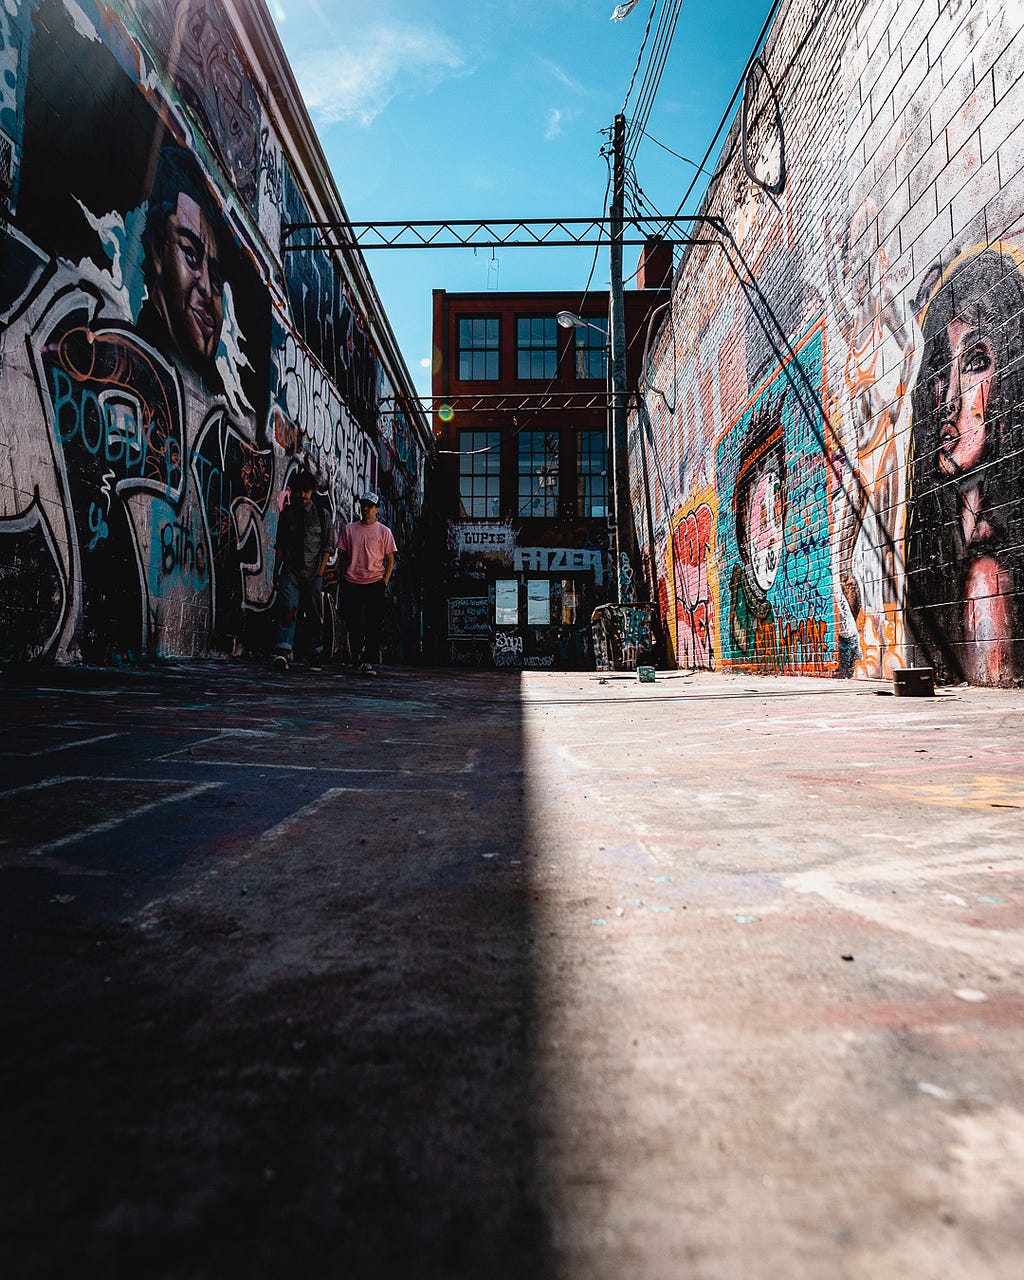 graffiti laden street slit between light and shadow side